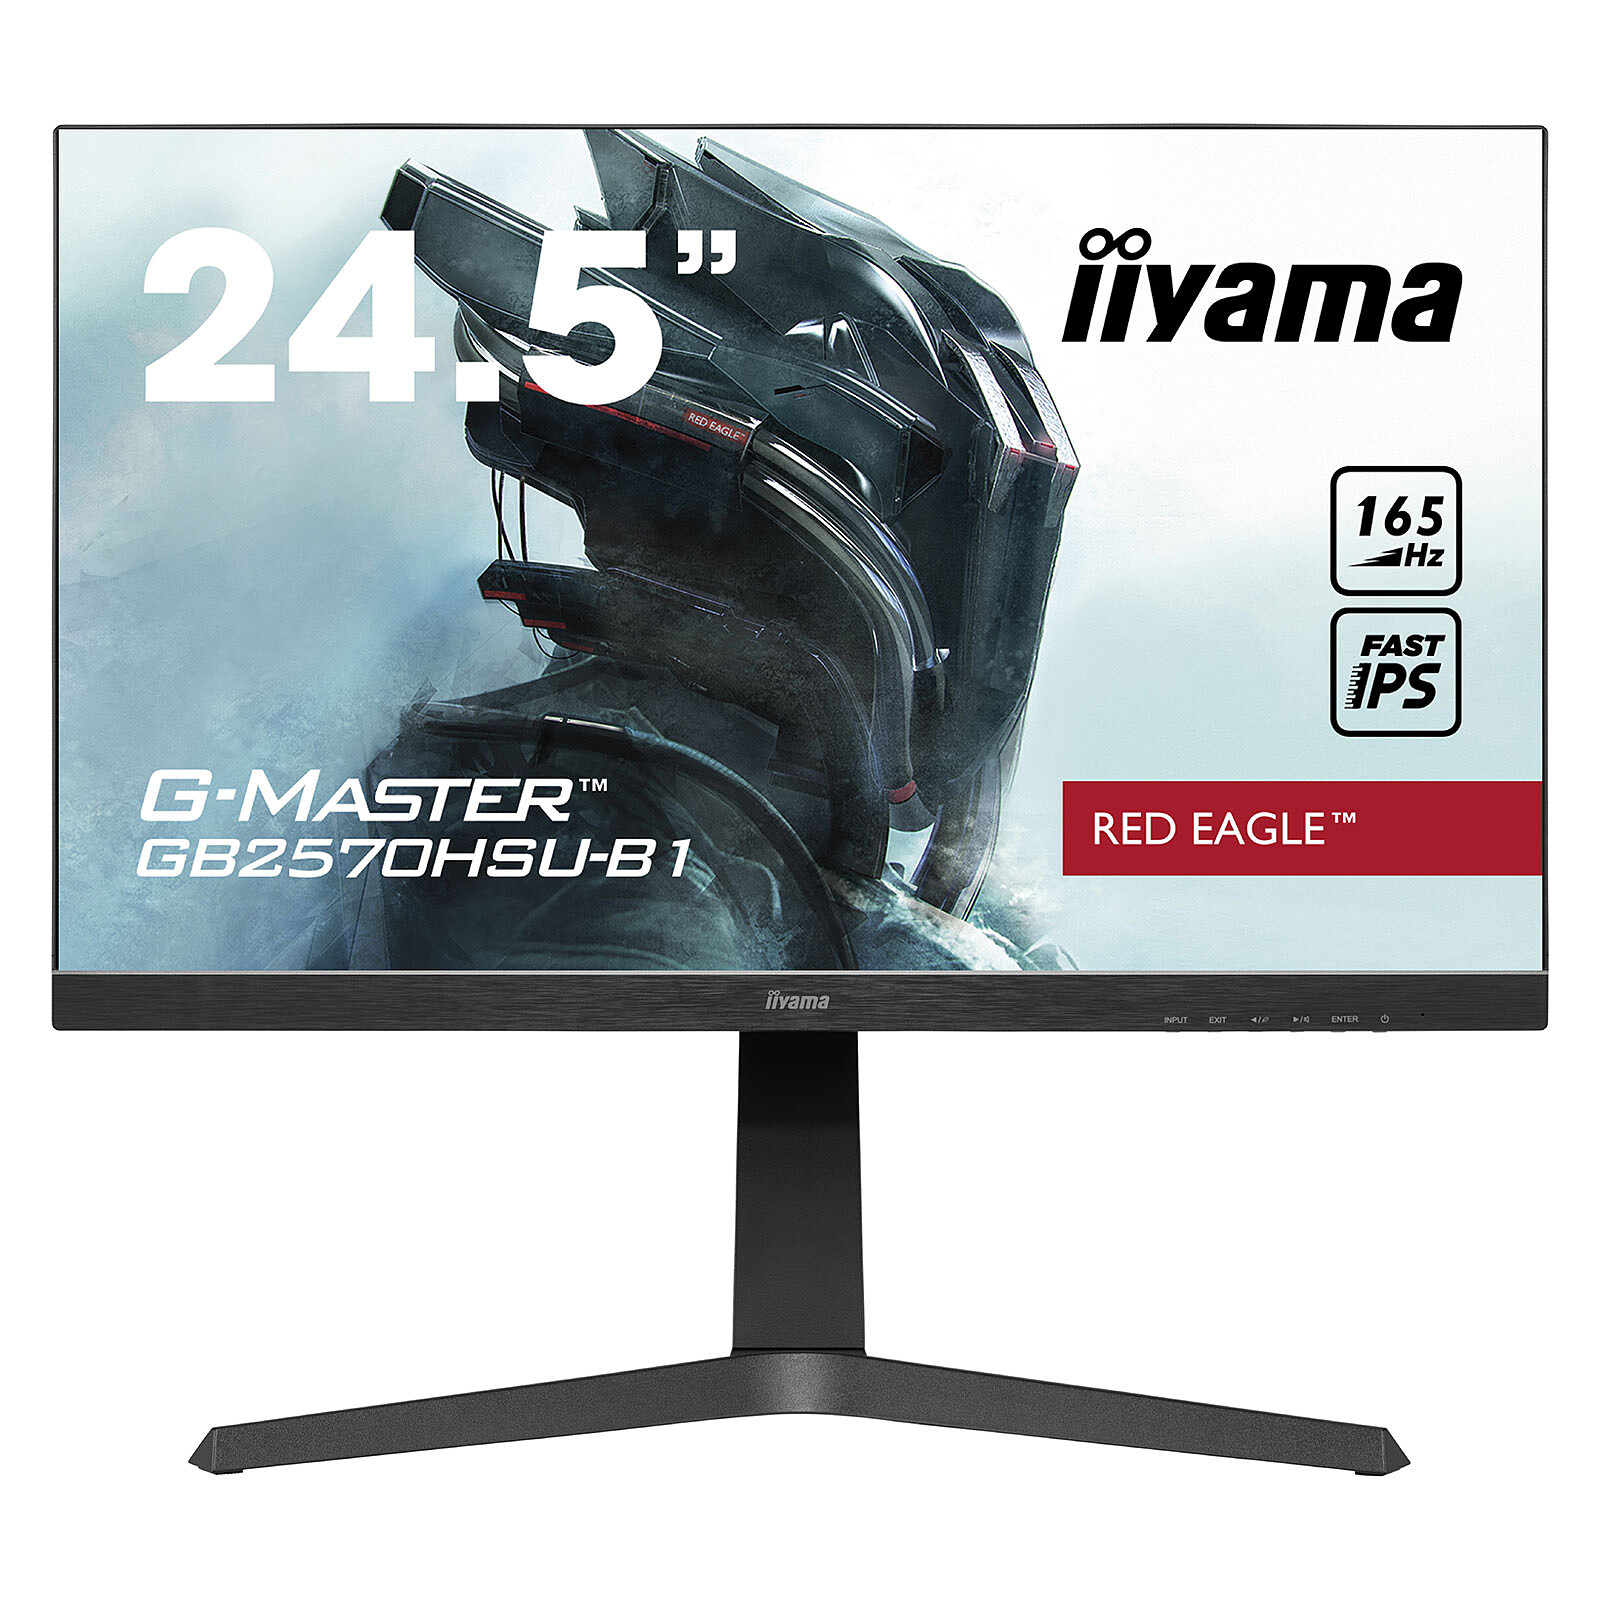 iiyama 24.5 LED - G-Master GB2570HSU-B1 Red Eagle - Ecran PC - LDLC